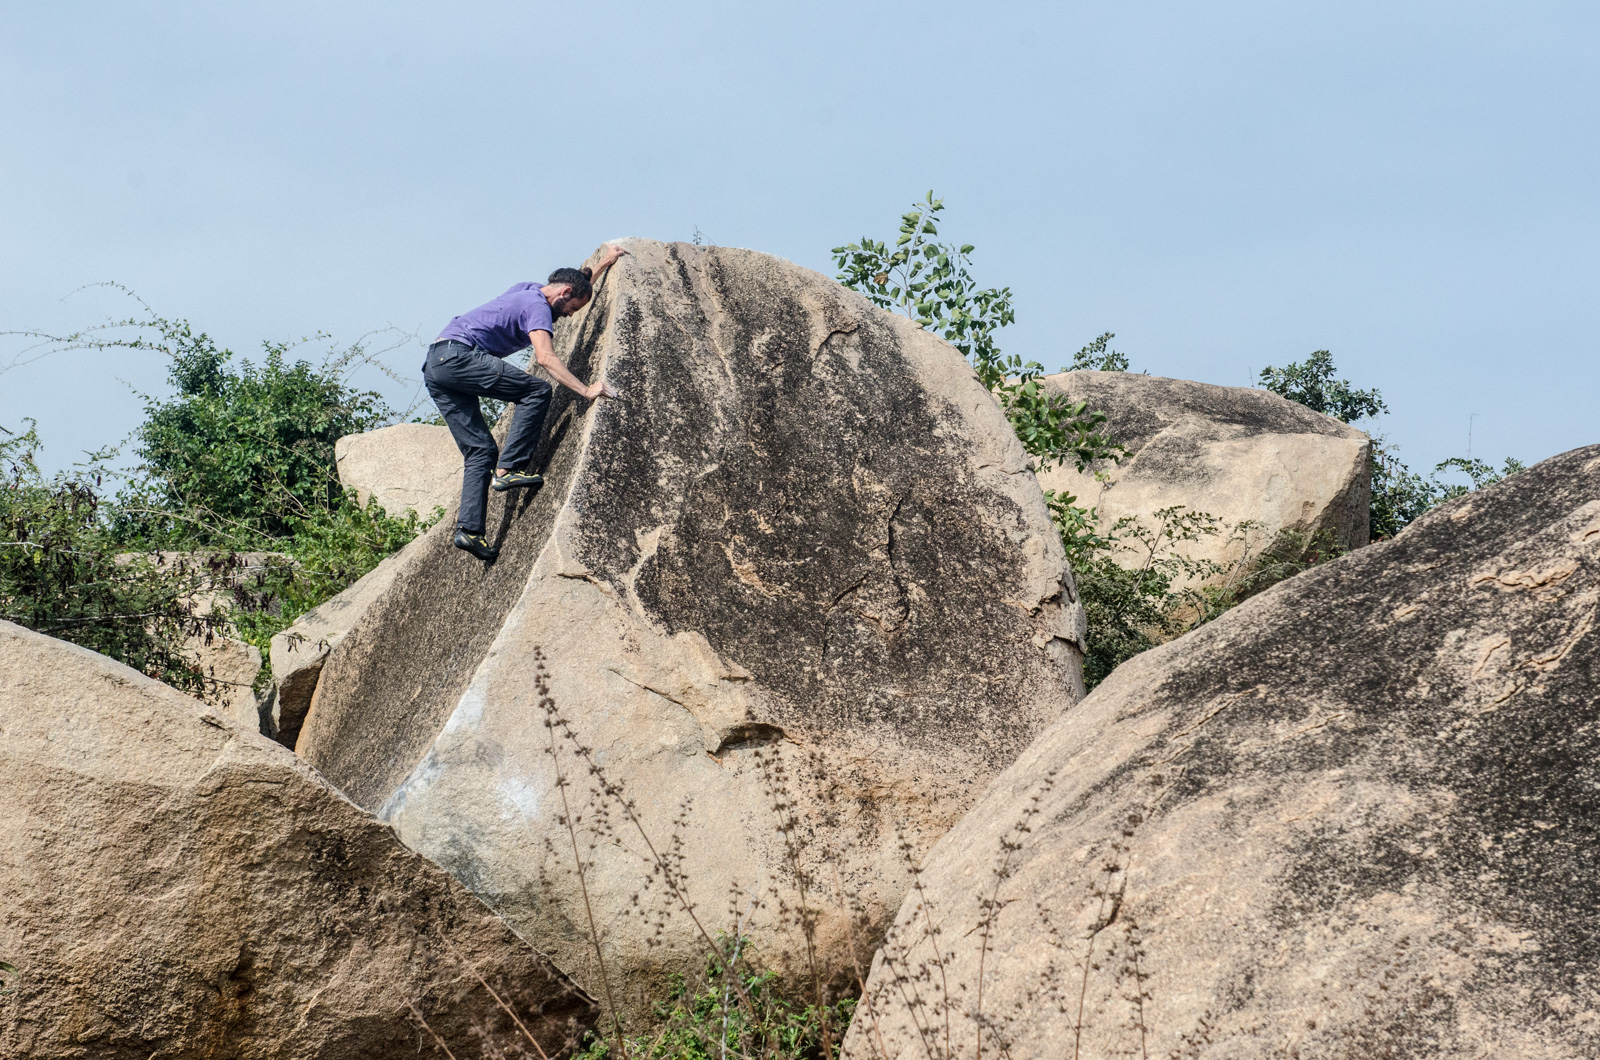 Hampi-India-bouldering-rockclimbing-AmyRolloPhoto-0969.jpg